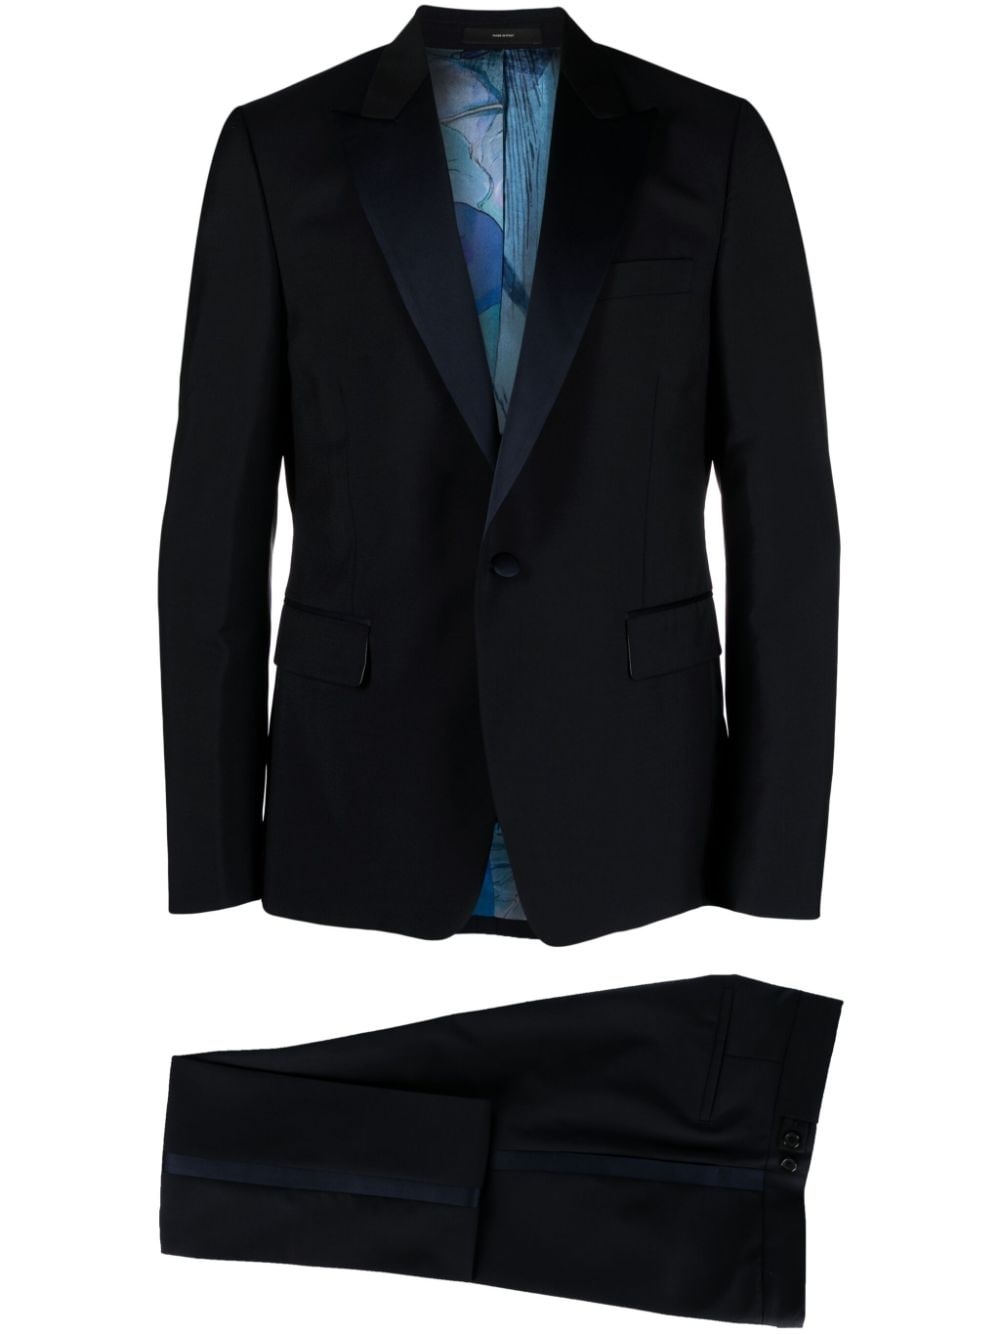 The Soho evening suit - 1